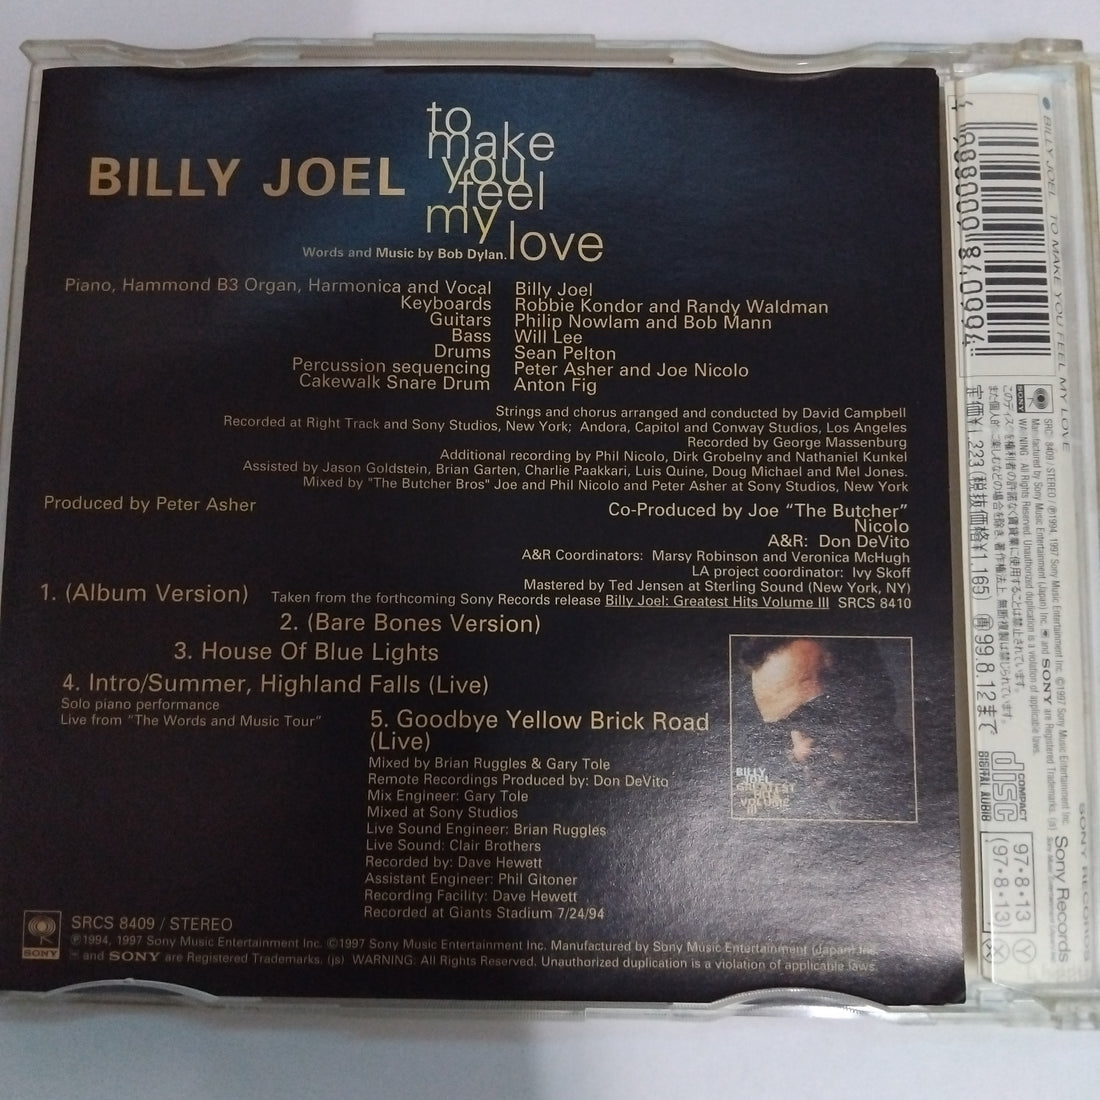 Billy Joel - To Make You Feel My Love (CD) (VG+)